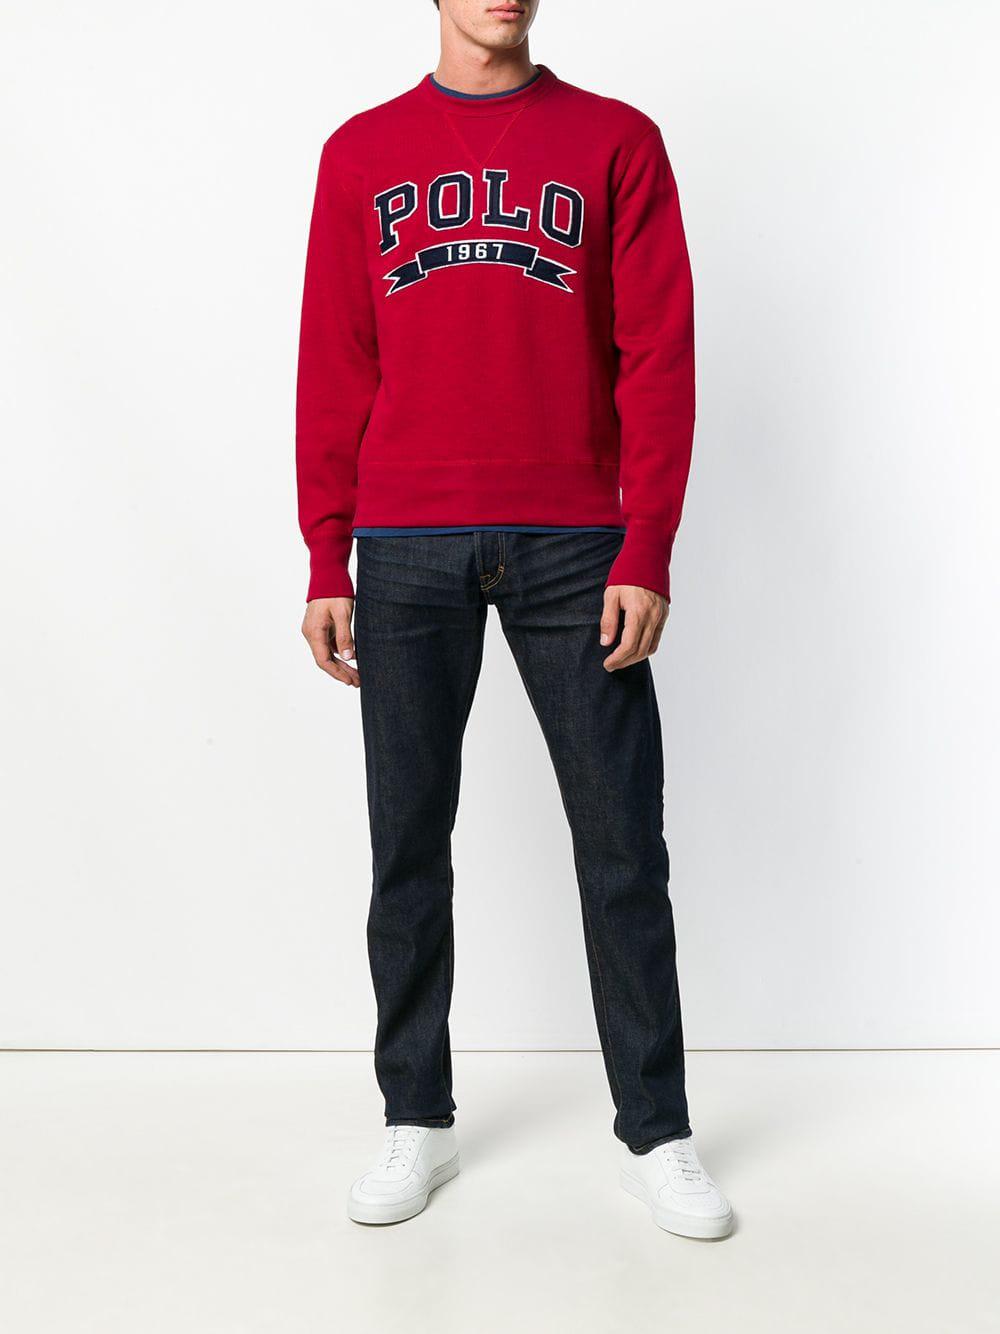 Polo Ralph Lauren Cotton Polo 1967 Sweatshirt in Red for Men | Lyst